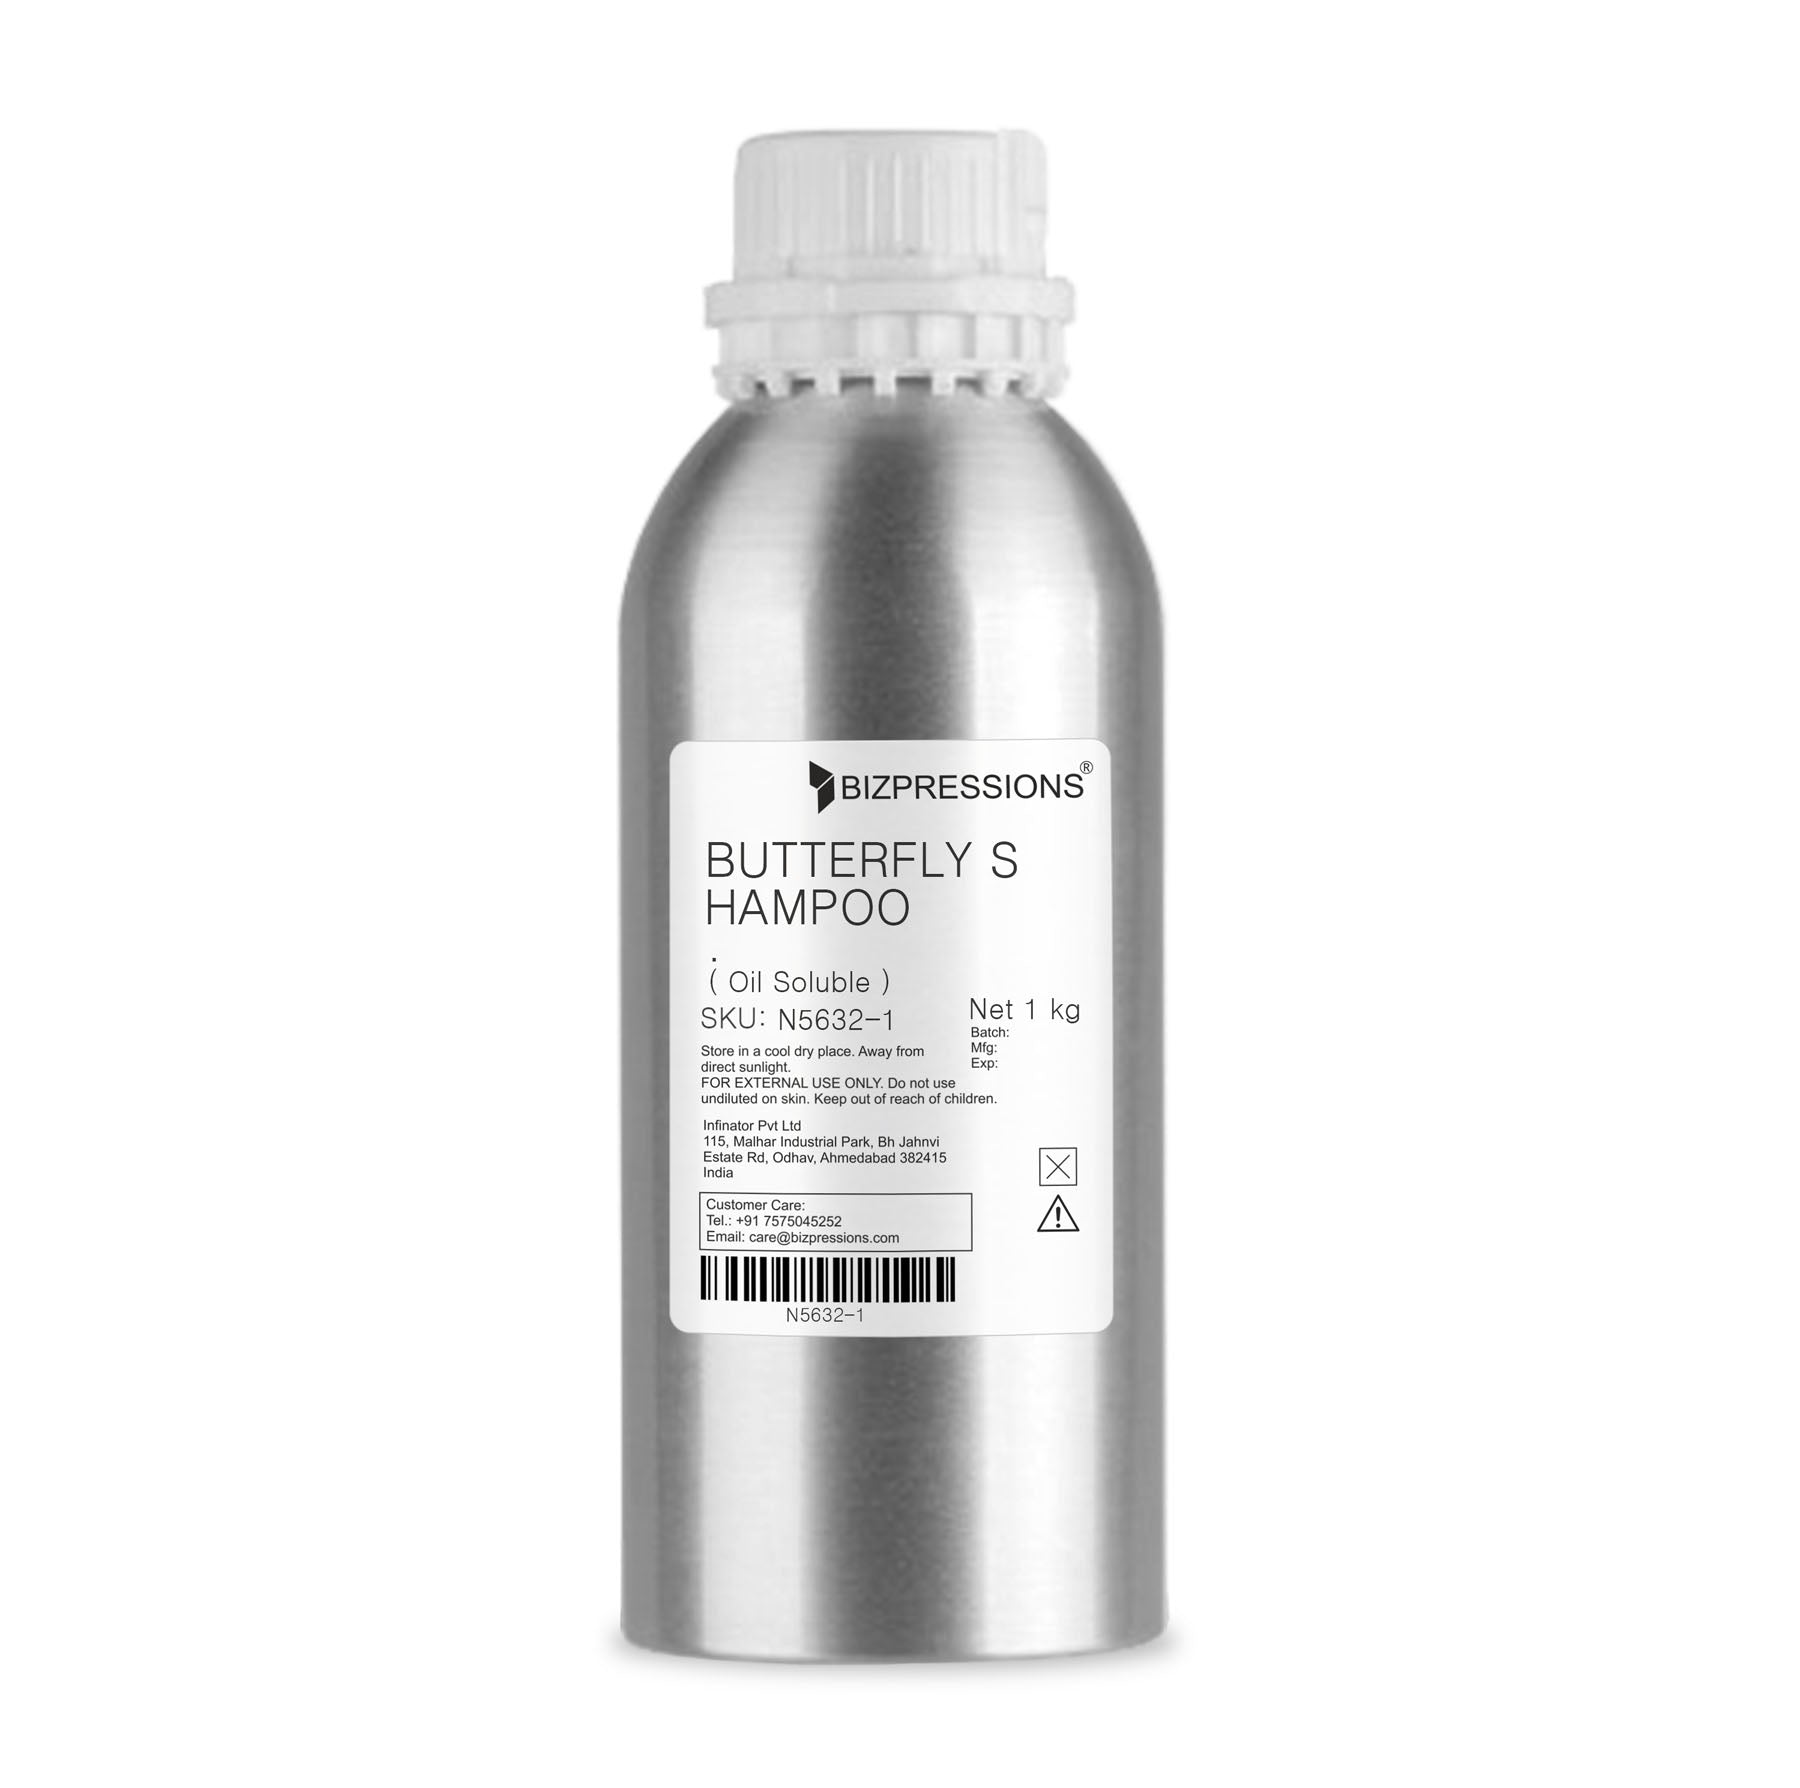 BUTTERFLY SHAMPOO - Fragrance ( Oil Soluble ) - 1 kg